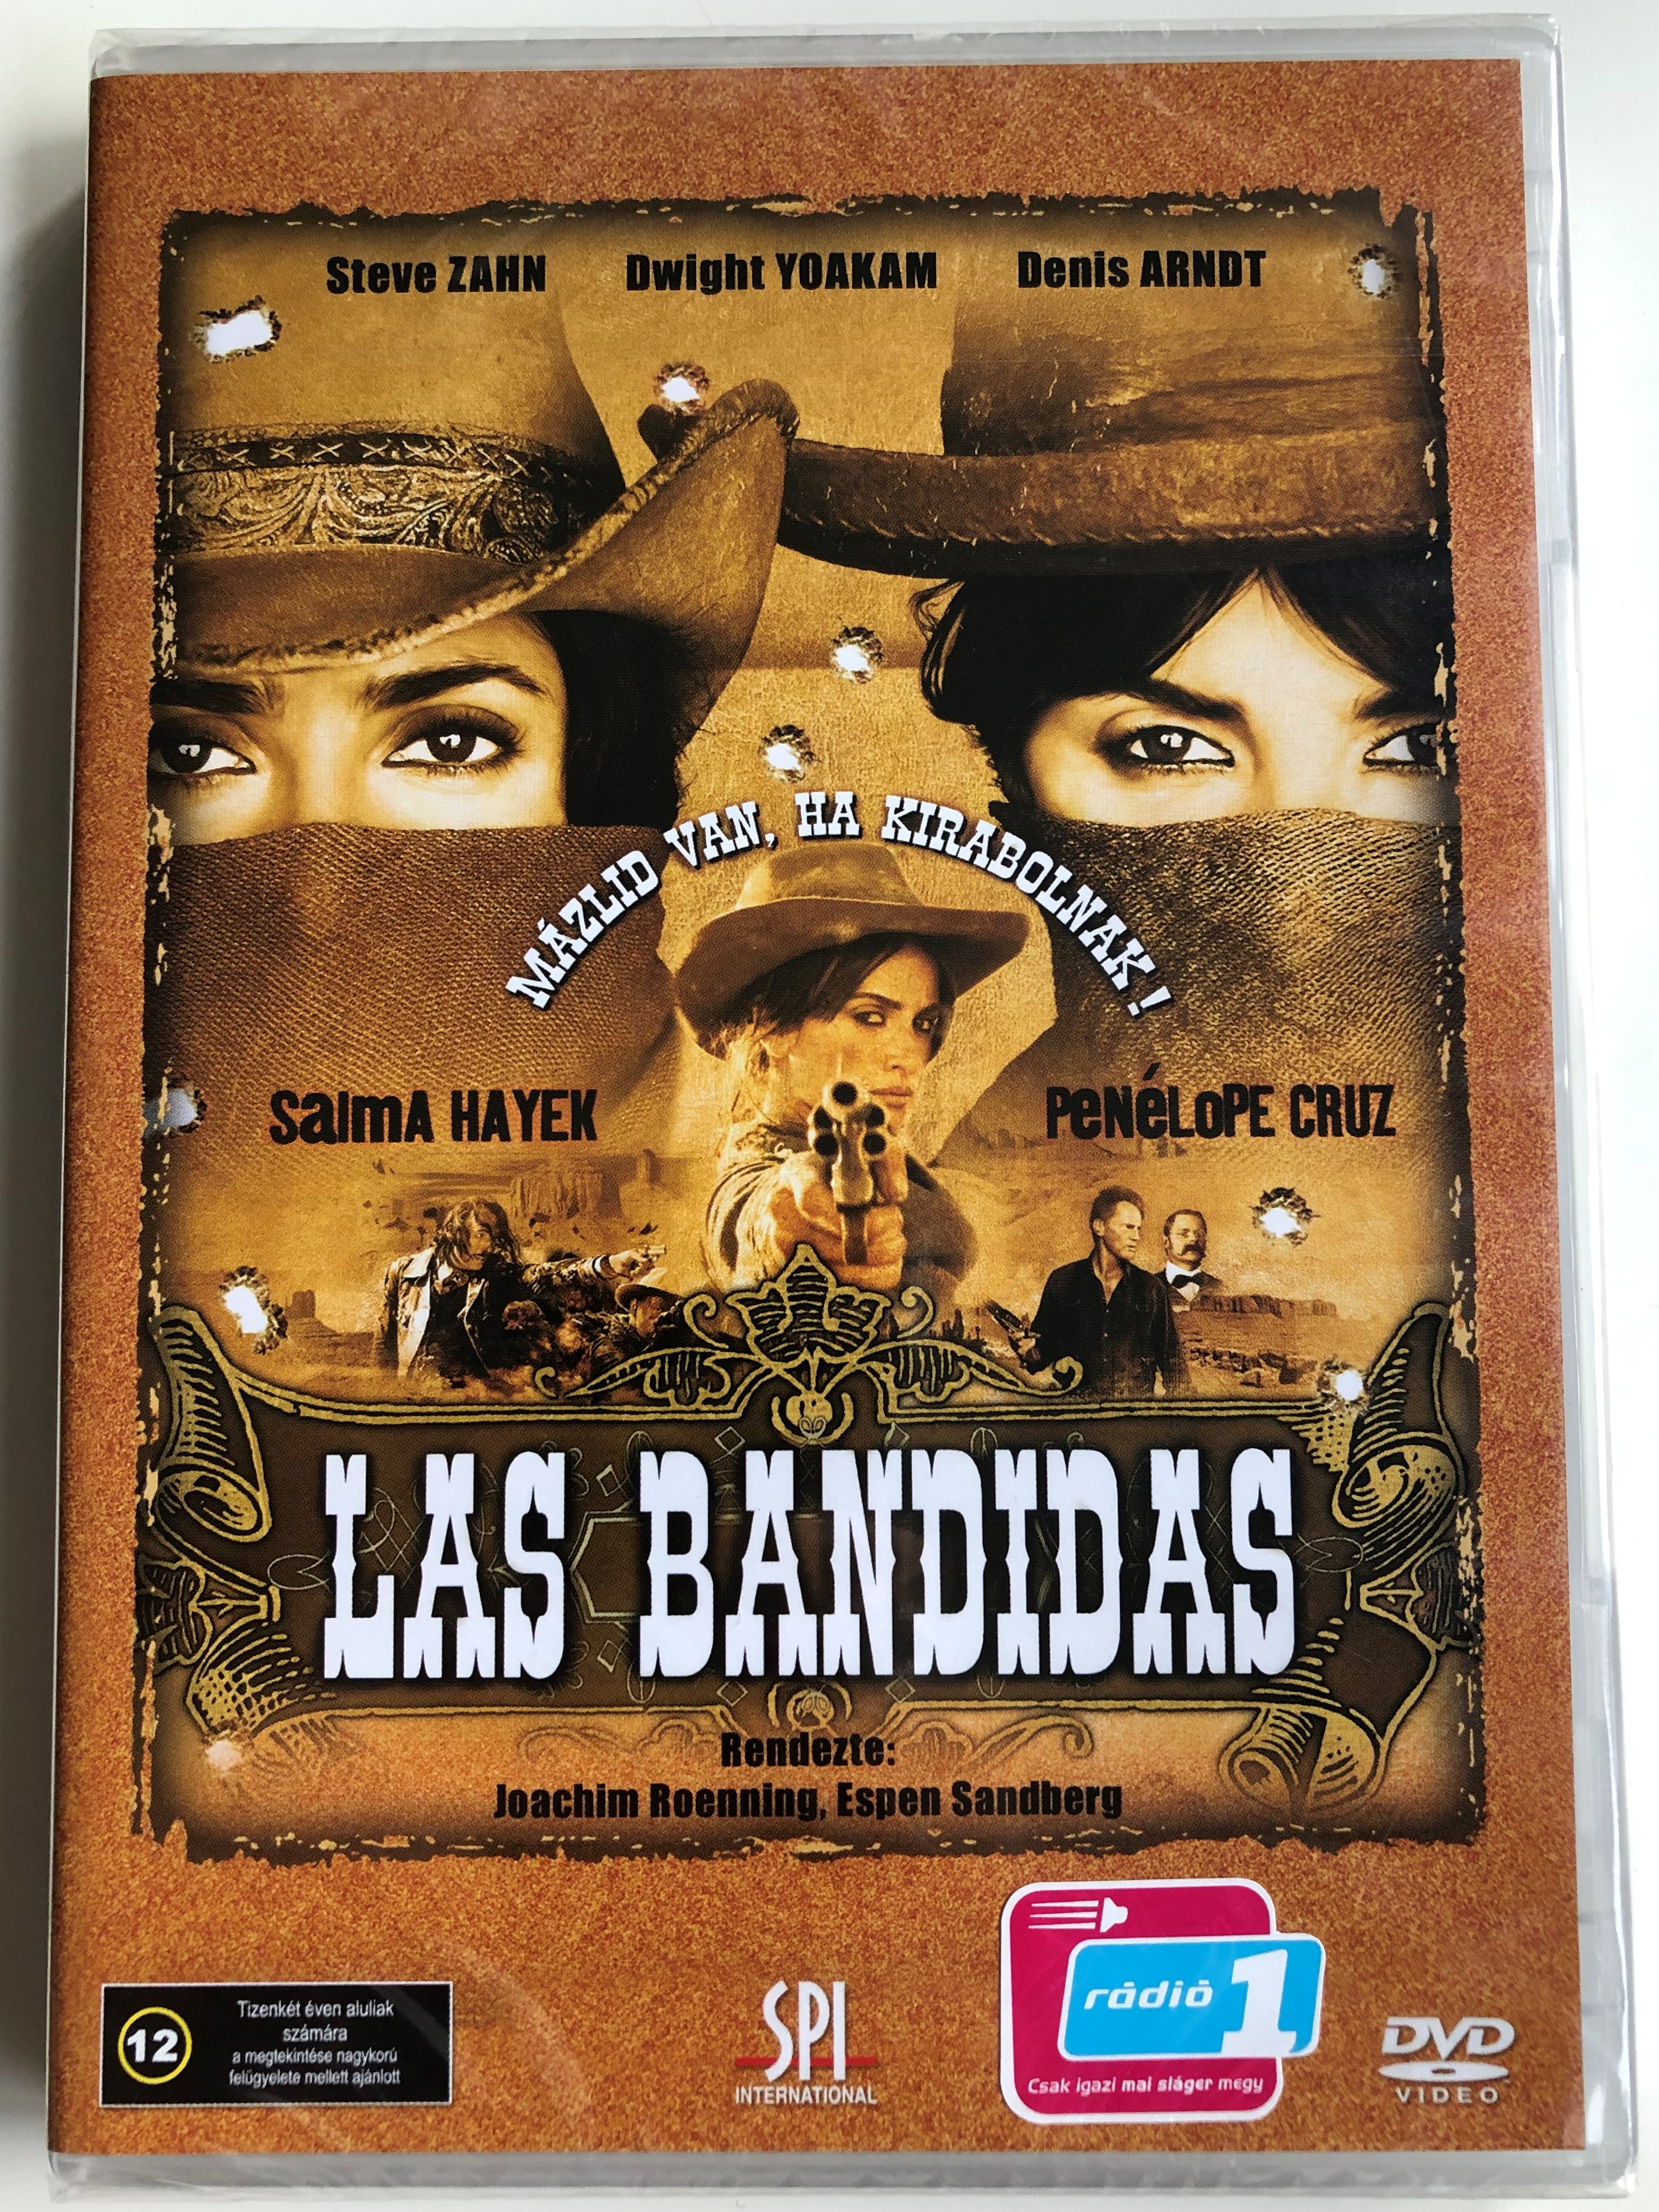 Bandidas DVD 2006 Las Bandidas / Directed by Joachim Rønning, Espen  Sandberg / Starring: Salma Hayek, Penélope Cruz, Steve Zahn, Sam Shepard,  Dwight Yoakam - bibleinmylanguage